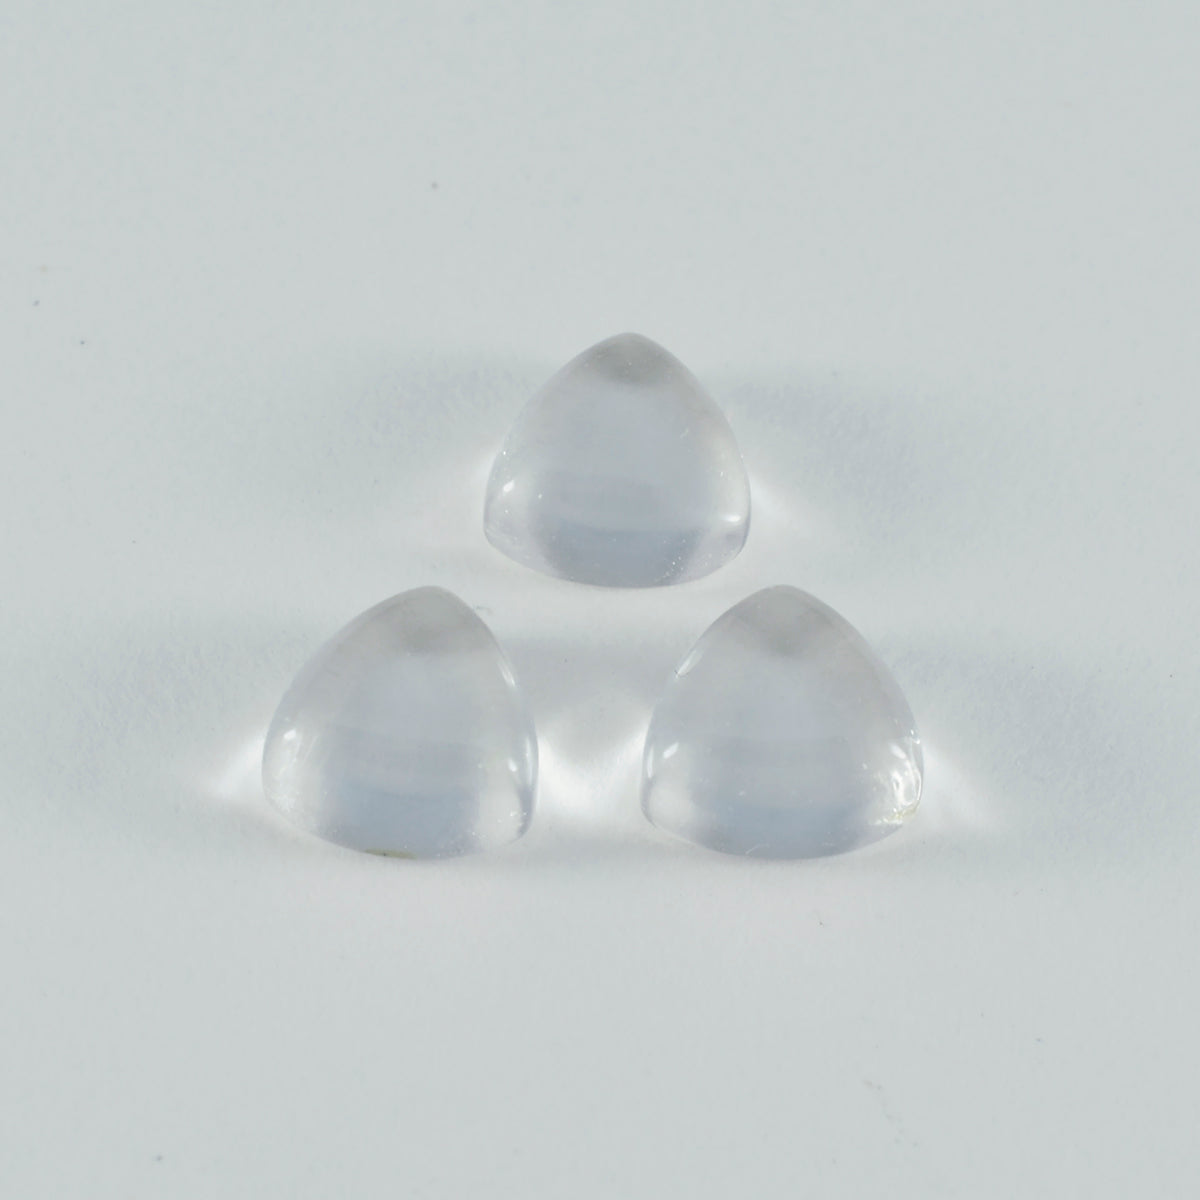 Riyogems 1PC White Crystal Quartz Cabochon 13x13 mm Trillion Shape amazing Quality Loose Gemstone